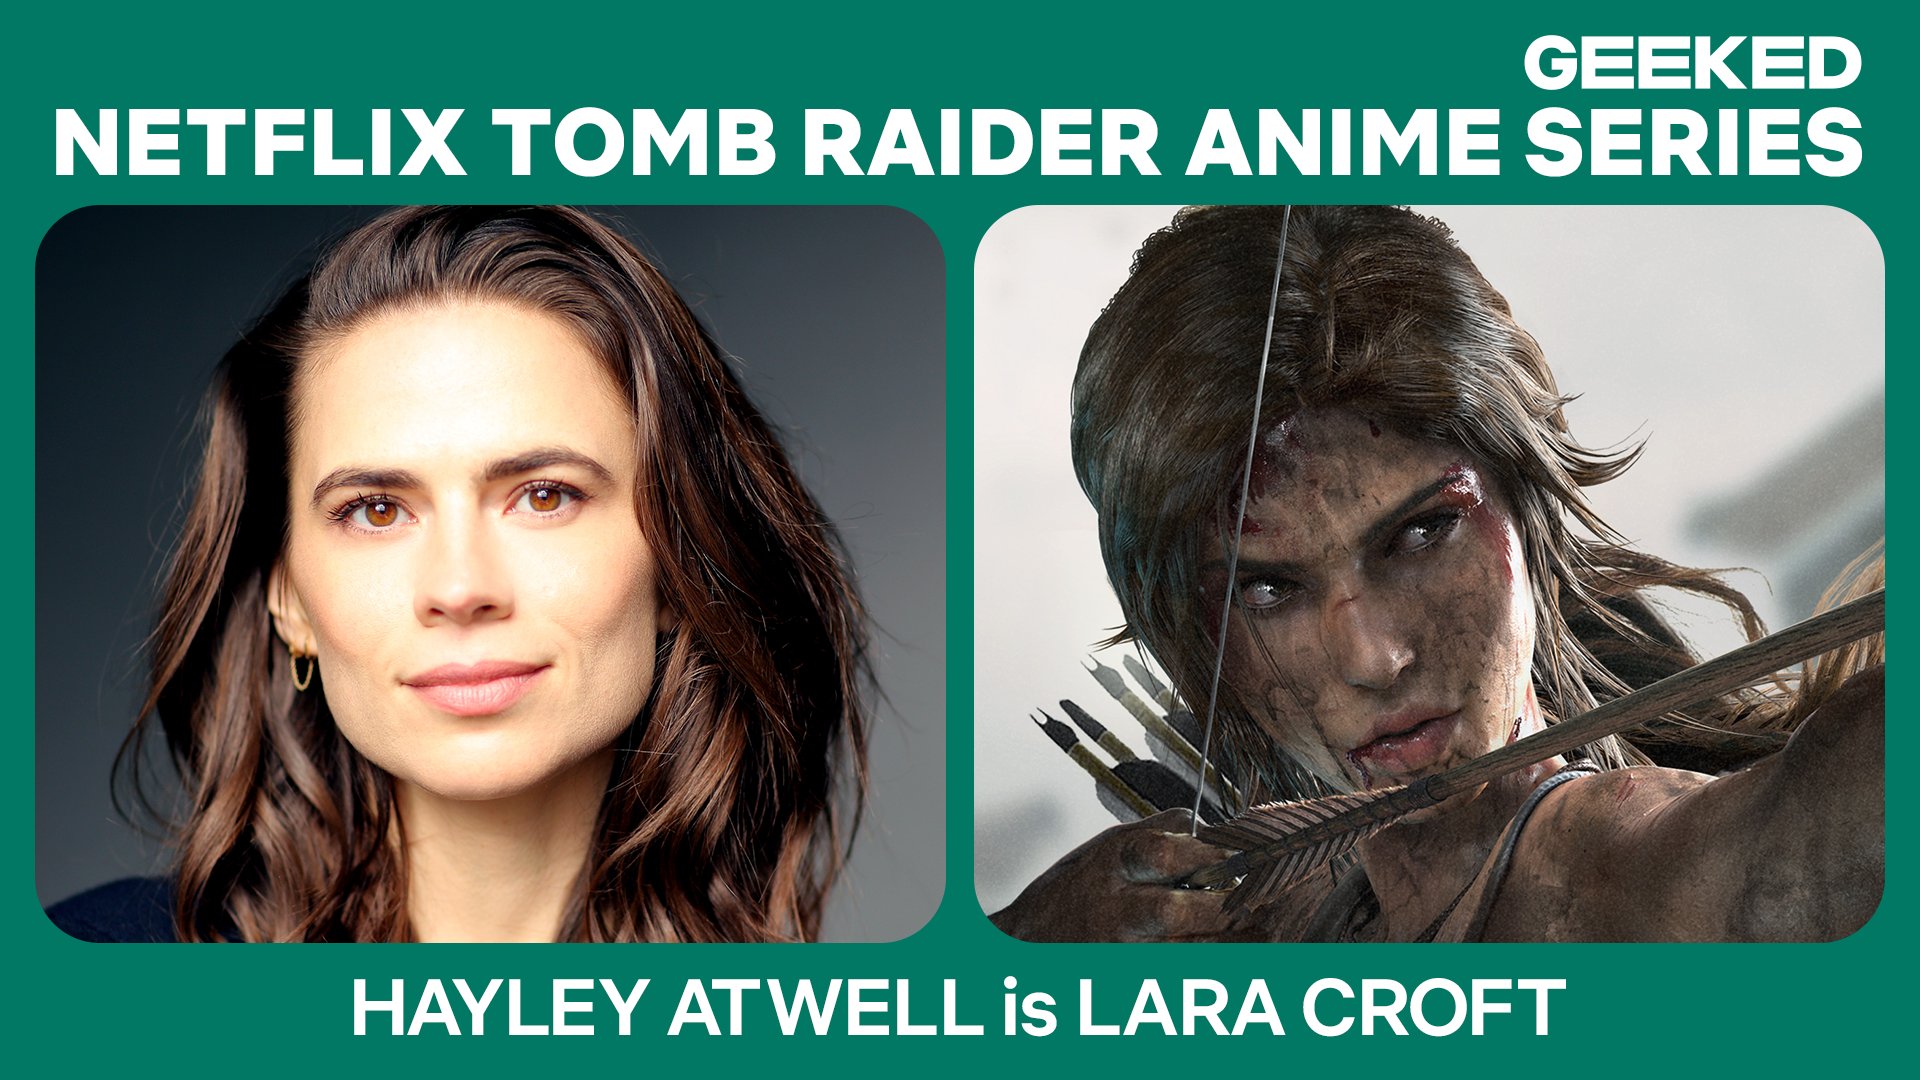 Wallpaper  anime bow Lara Croft Tomb Raider arrows mythology ART  screenshot 1680x1050  CoolWallpapers  581930  HD Wallpapers  WallHere